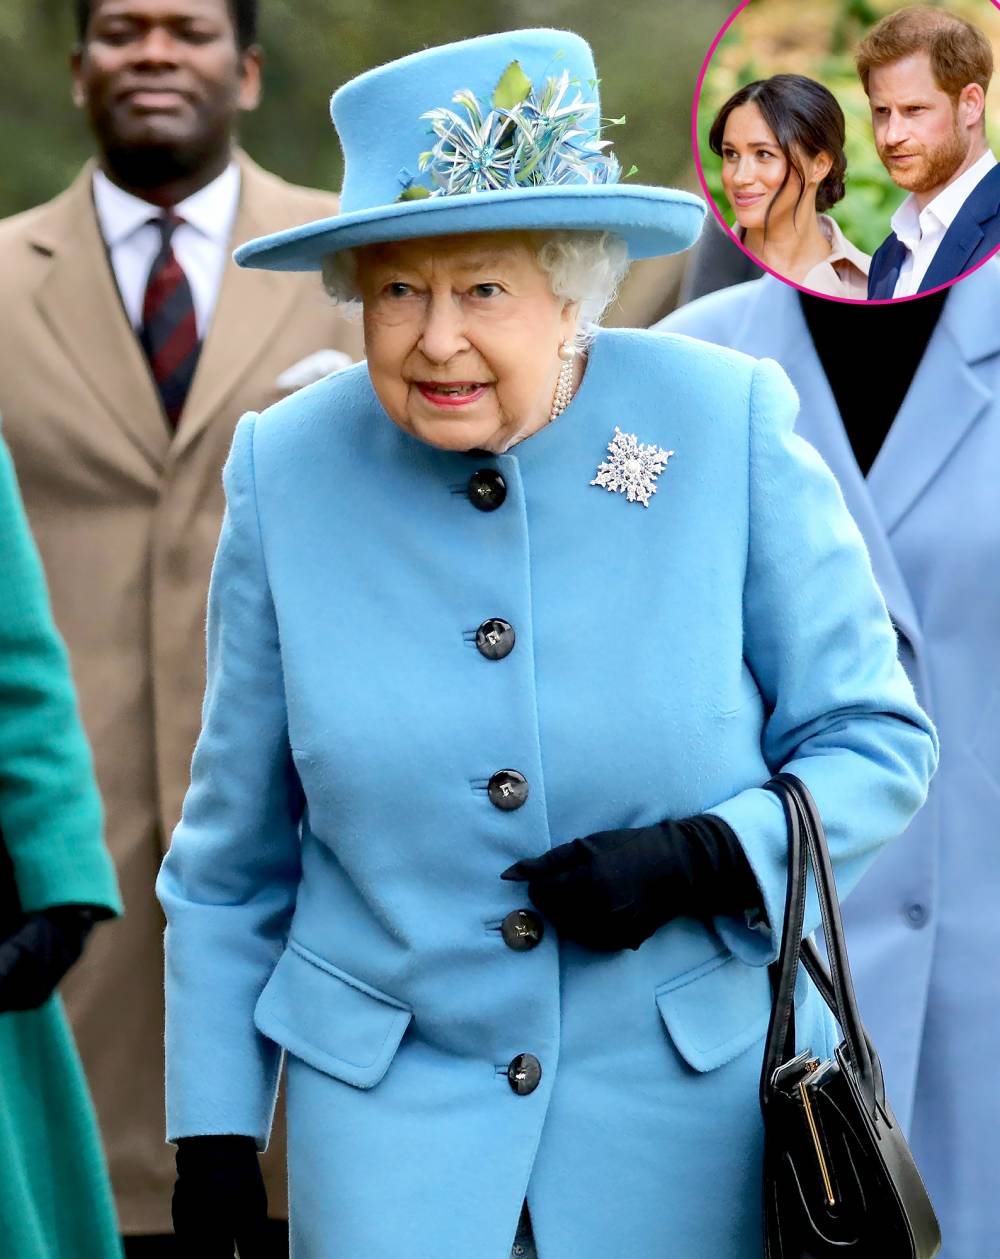 Queen Elizabeth II Seemingly Shows Subtle Support for Harry, Meghan